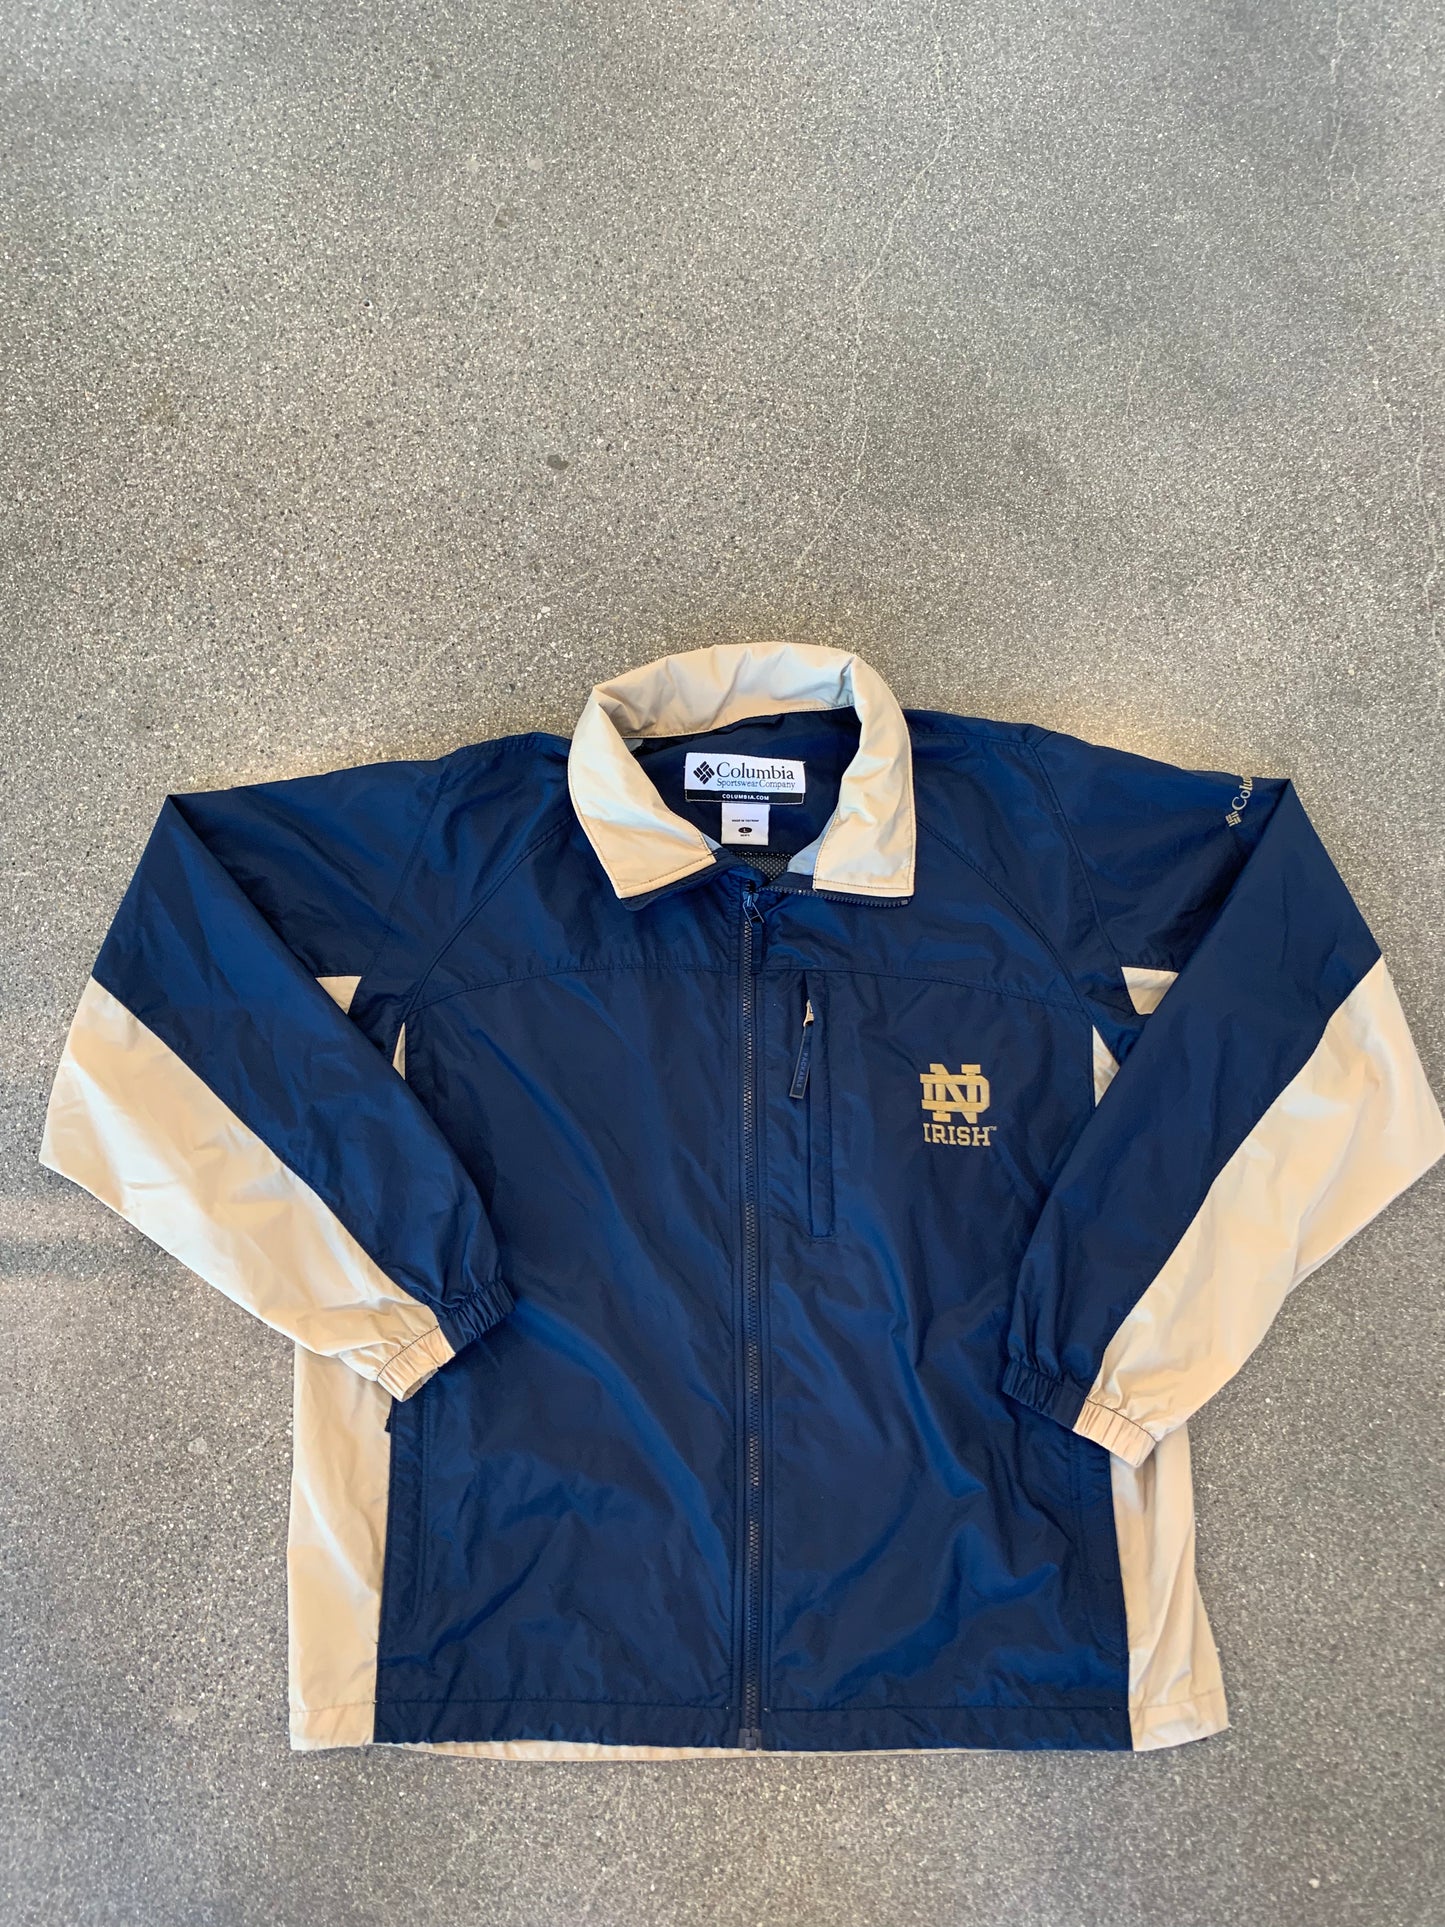 Notre Dame Columbia Jacket